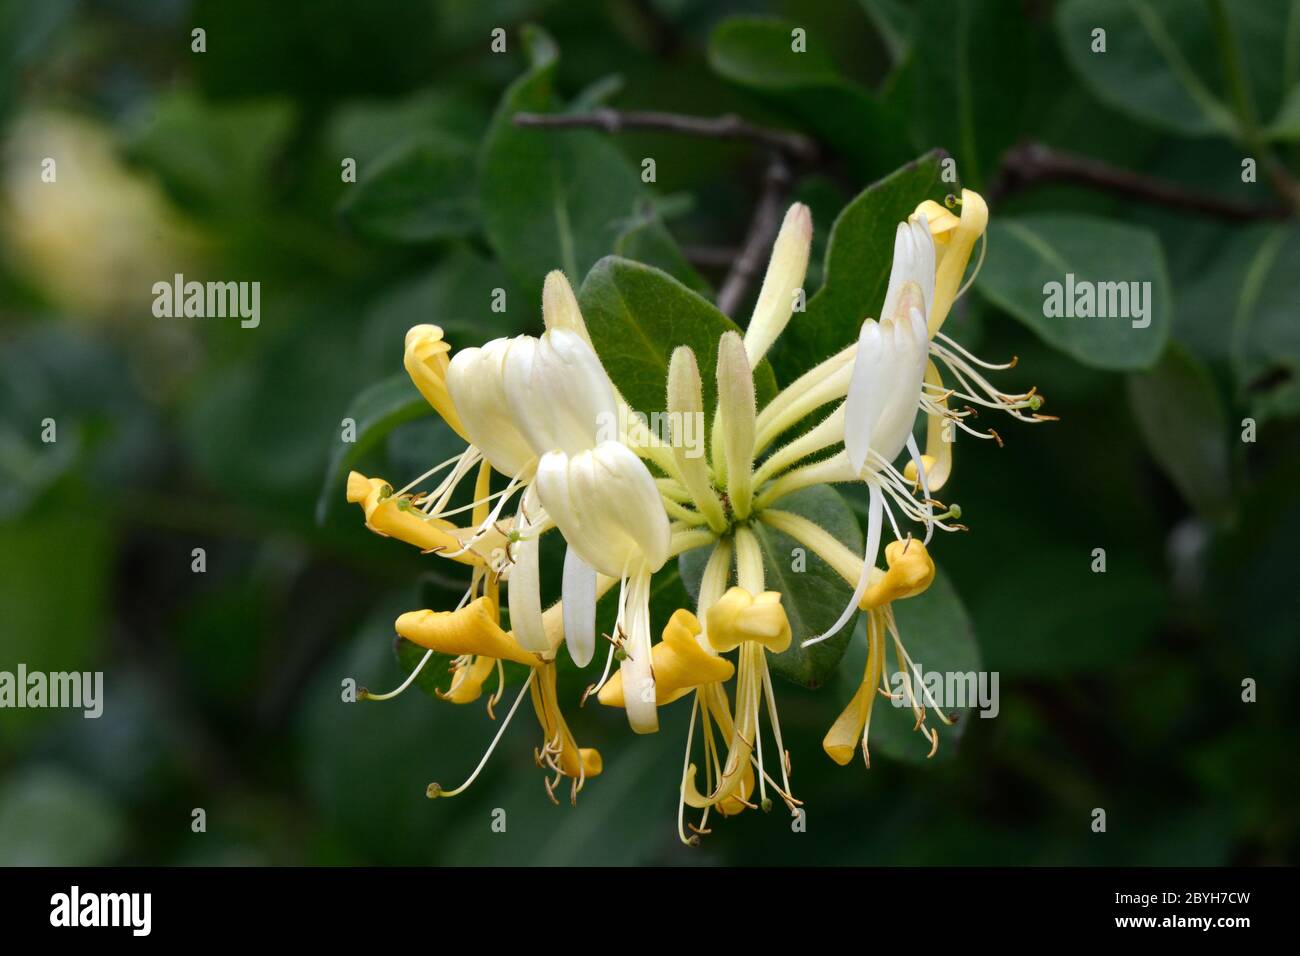 Wild honeysuckle flower flowers growing in a hedgerow Lonicera periclymenum Stock Photo